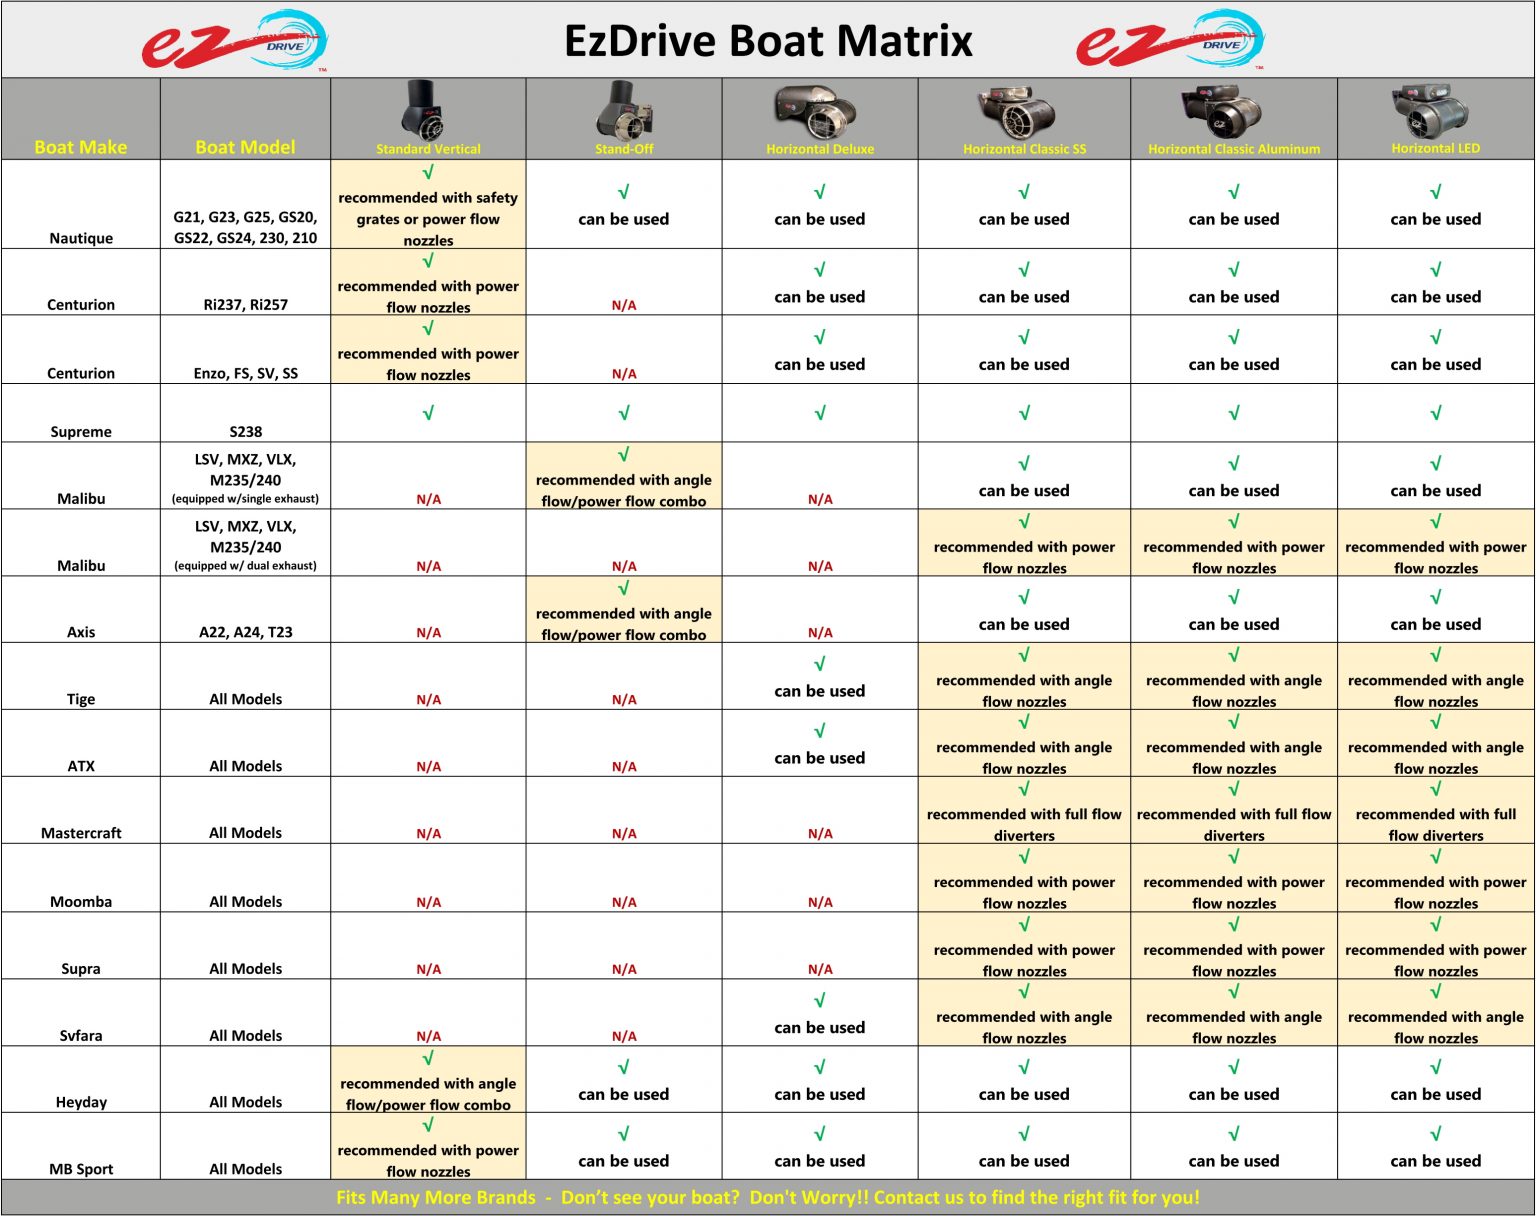 ezDrive Model/Brand Matrix